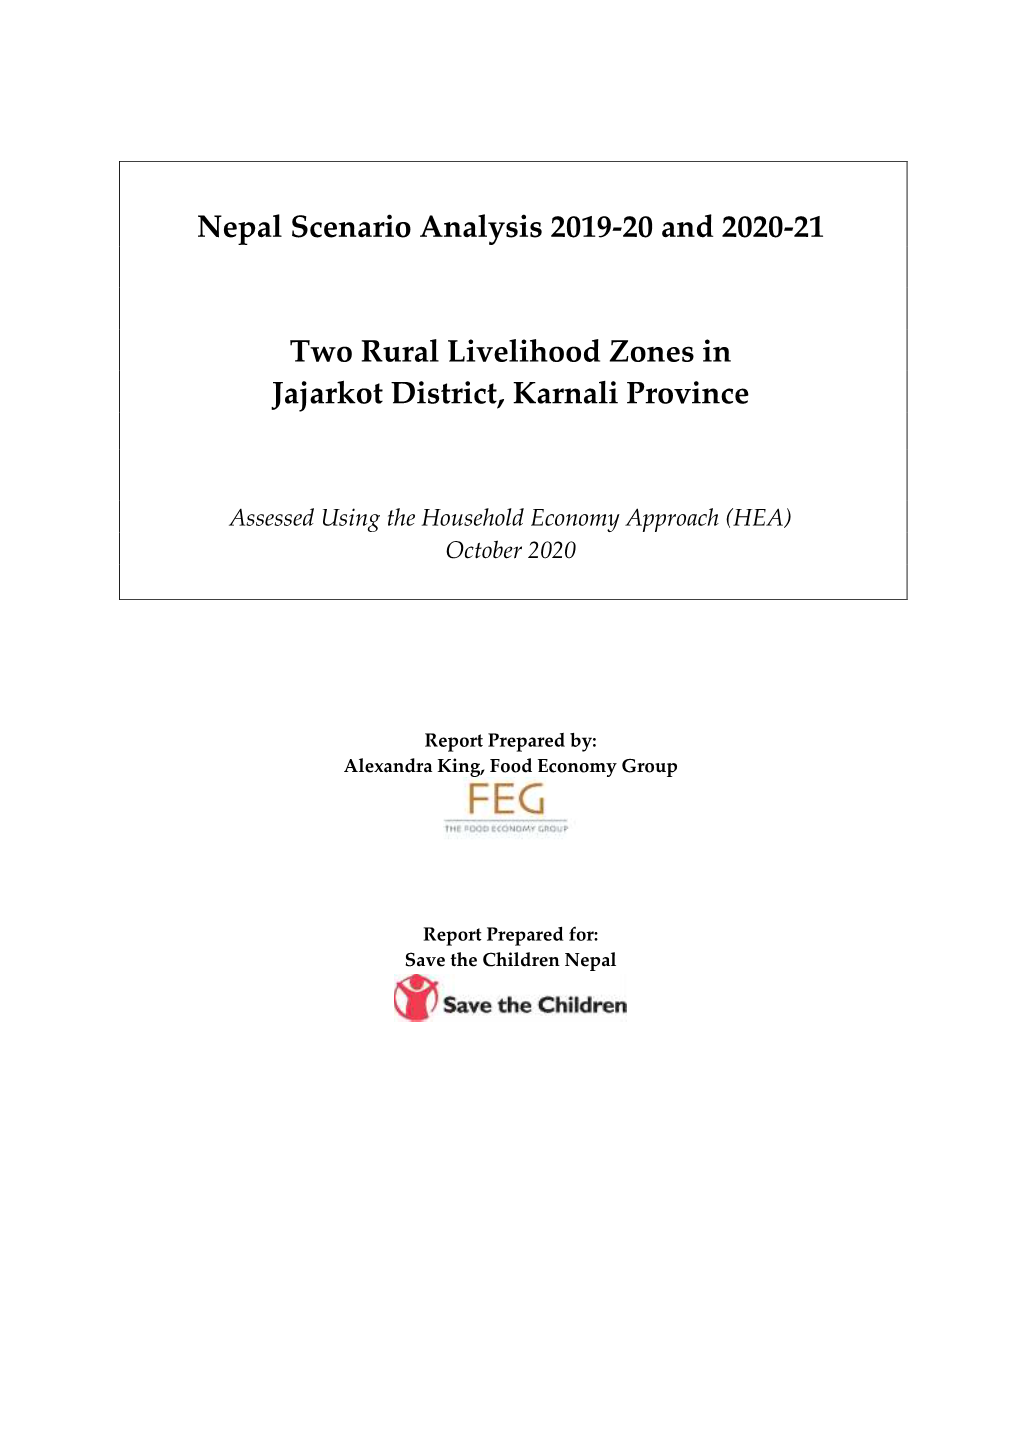 Nepal, Jajarkot District, Karnali Provice, OA Report Oct 2020